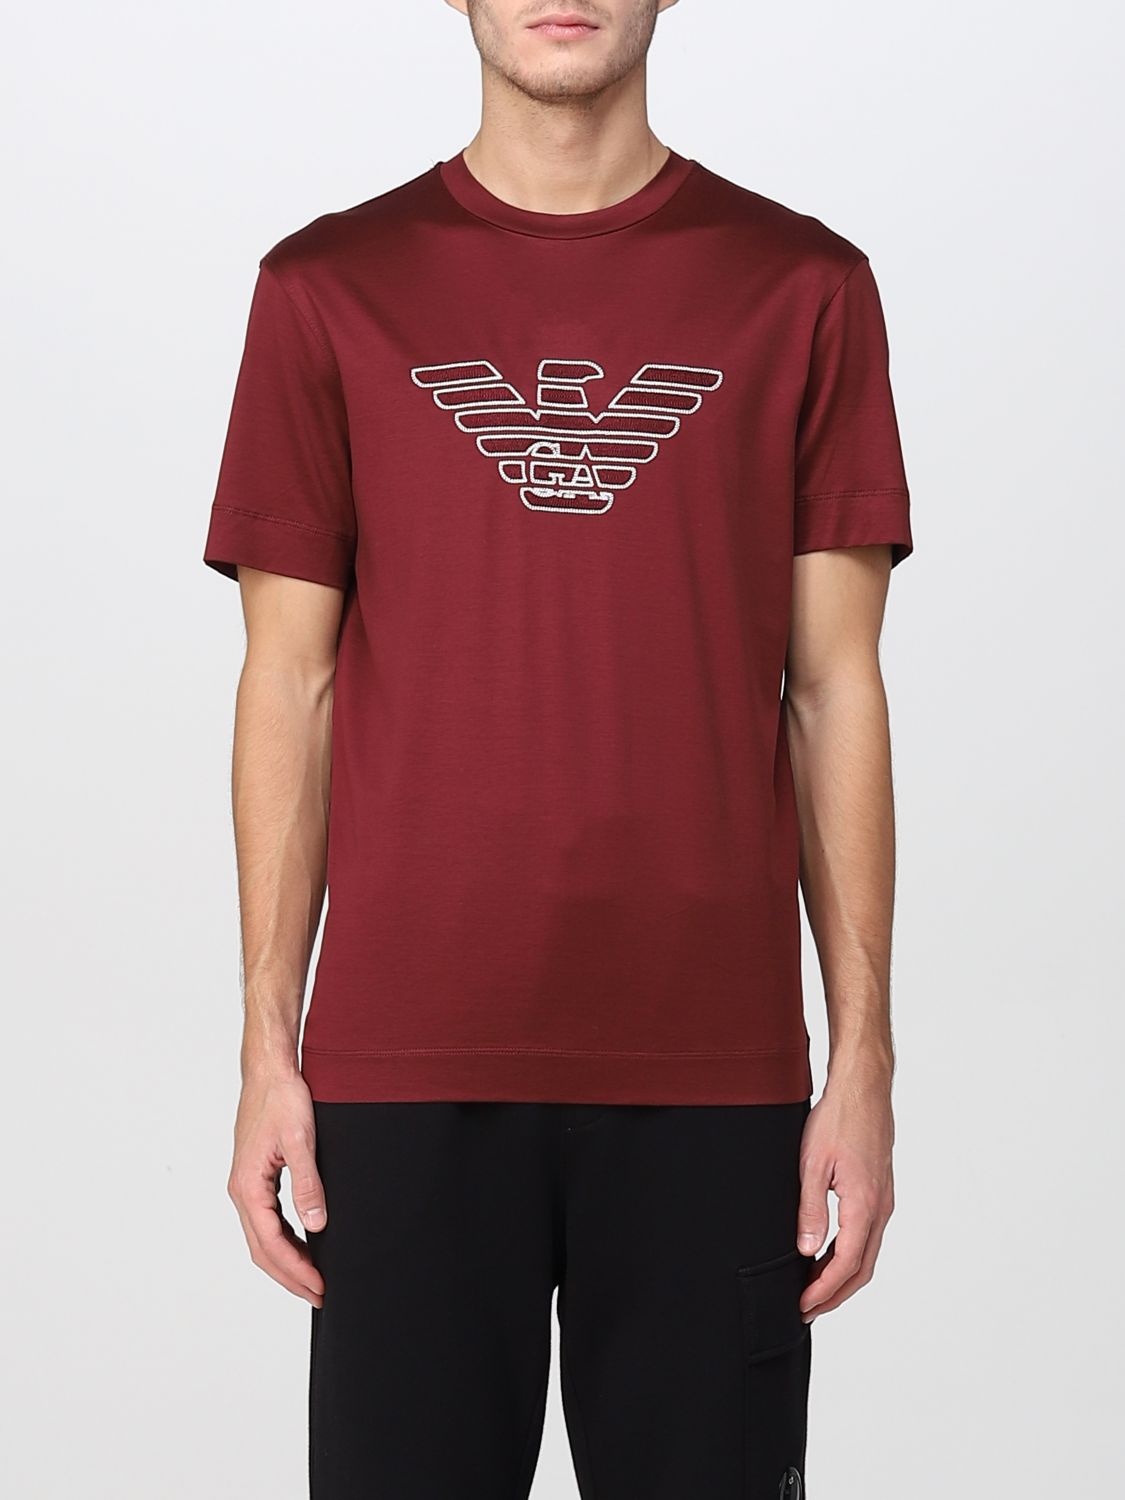 Stuepige metallisk sød smag EMPORIO ARMANI: t-shirt for man - Red | Emporio Armani t-shirt 6L1TH21JUVZ  online on GIGLIO.COM